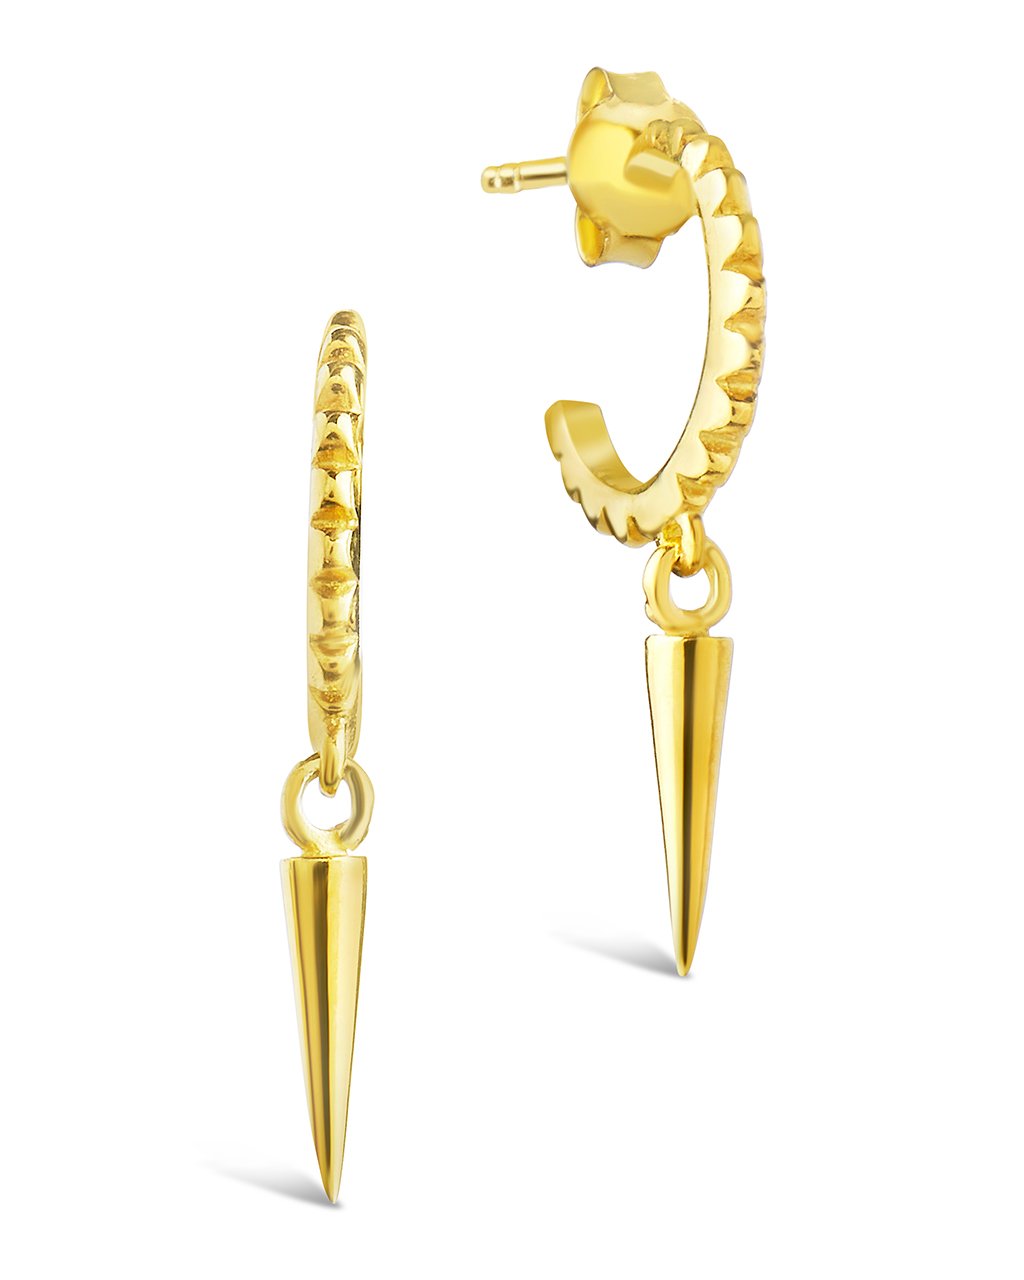 Gold Gilded Spike Stud Earrings in Oxidized Sterling Silver